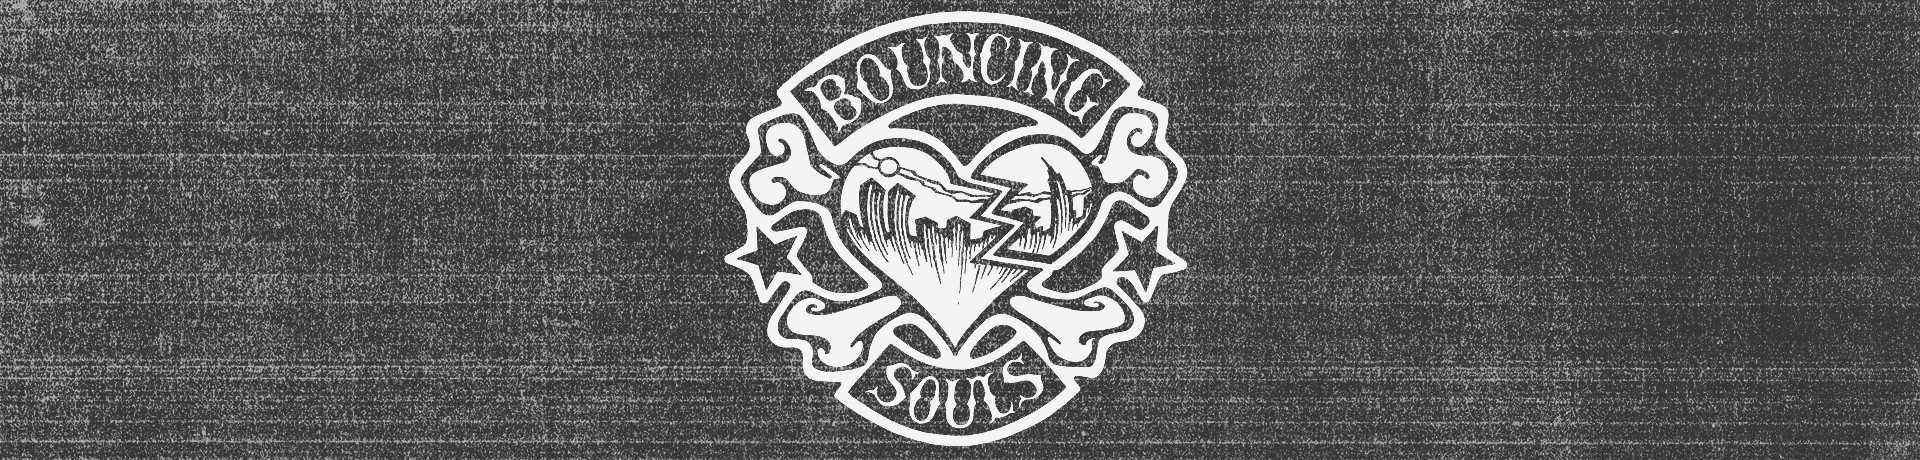 Bouncing Souls - Rocker Heart [Caneca]